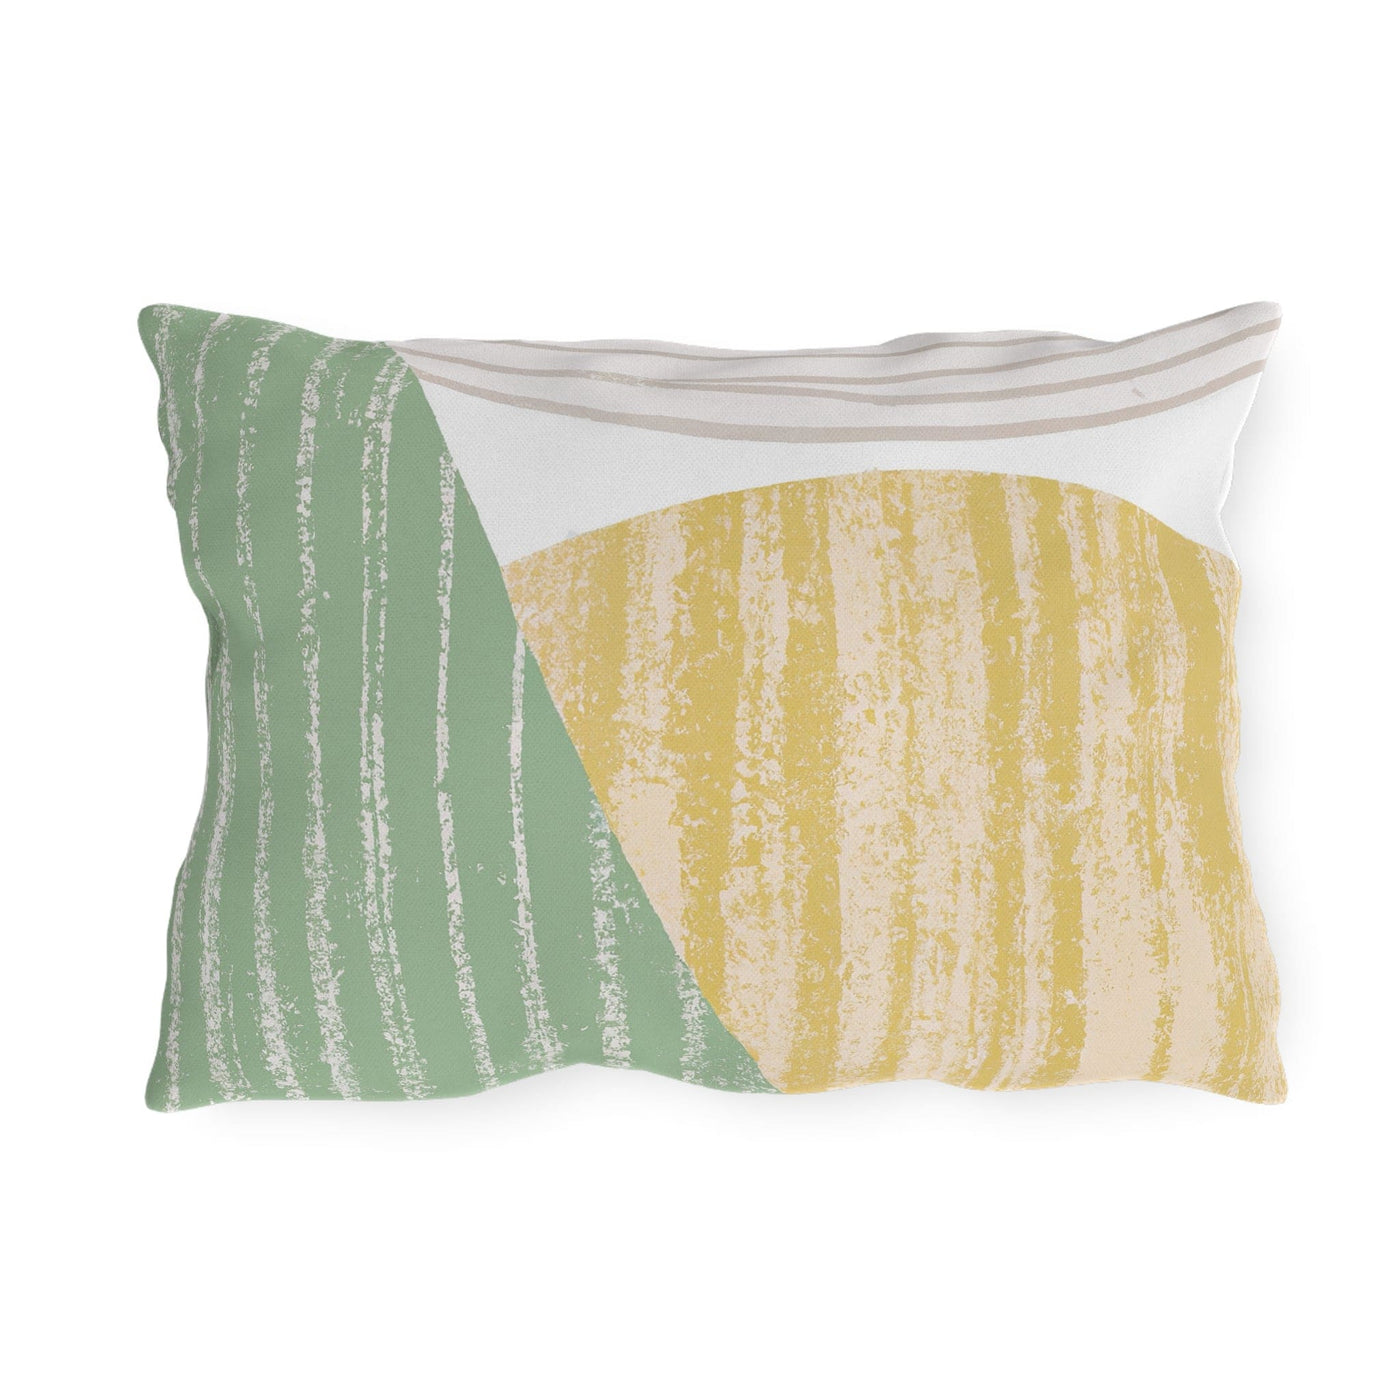 Decorative Outdoor Pillows With Zipper - Set Of 2 Mint Green Textured Look Boho